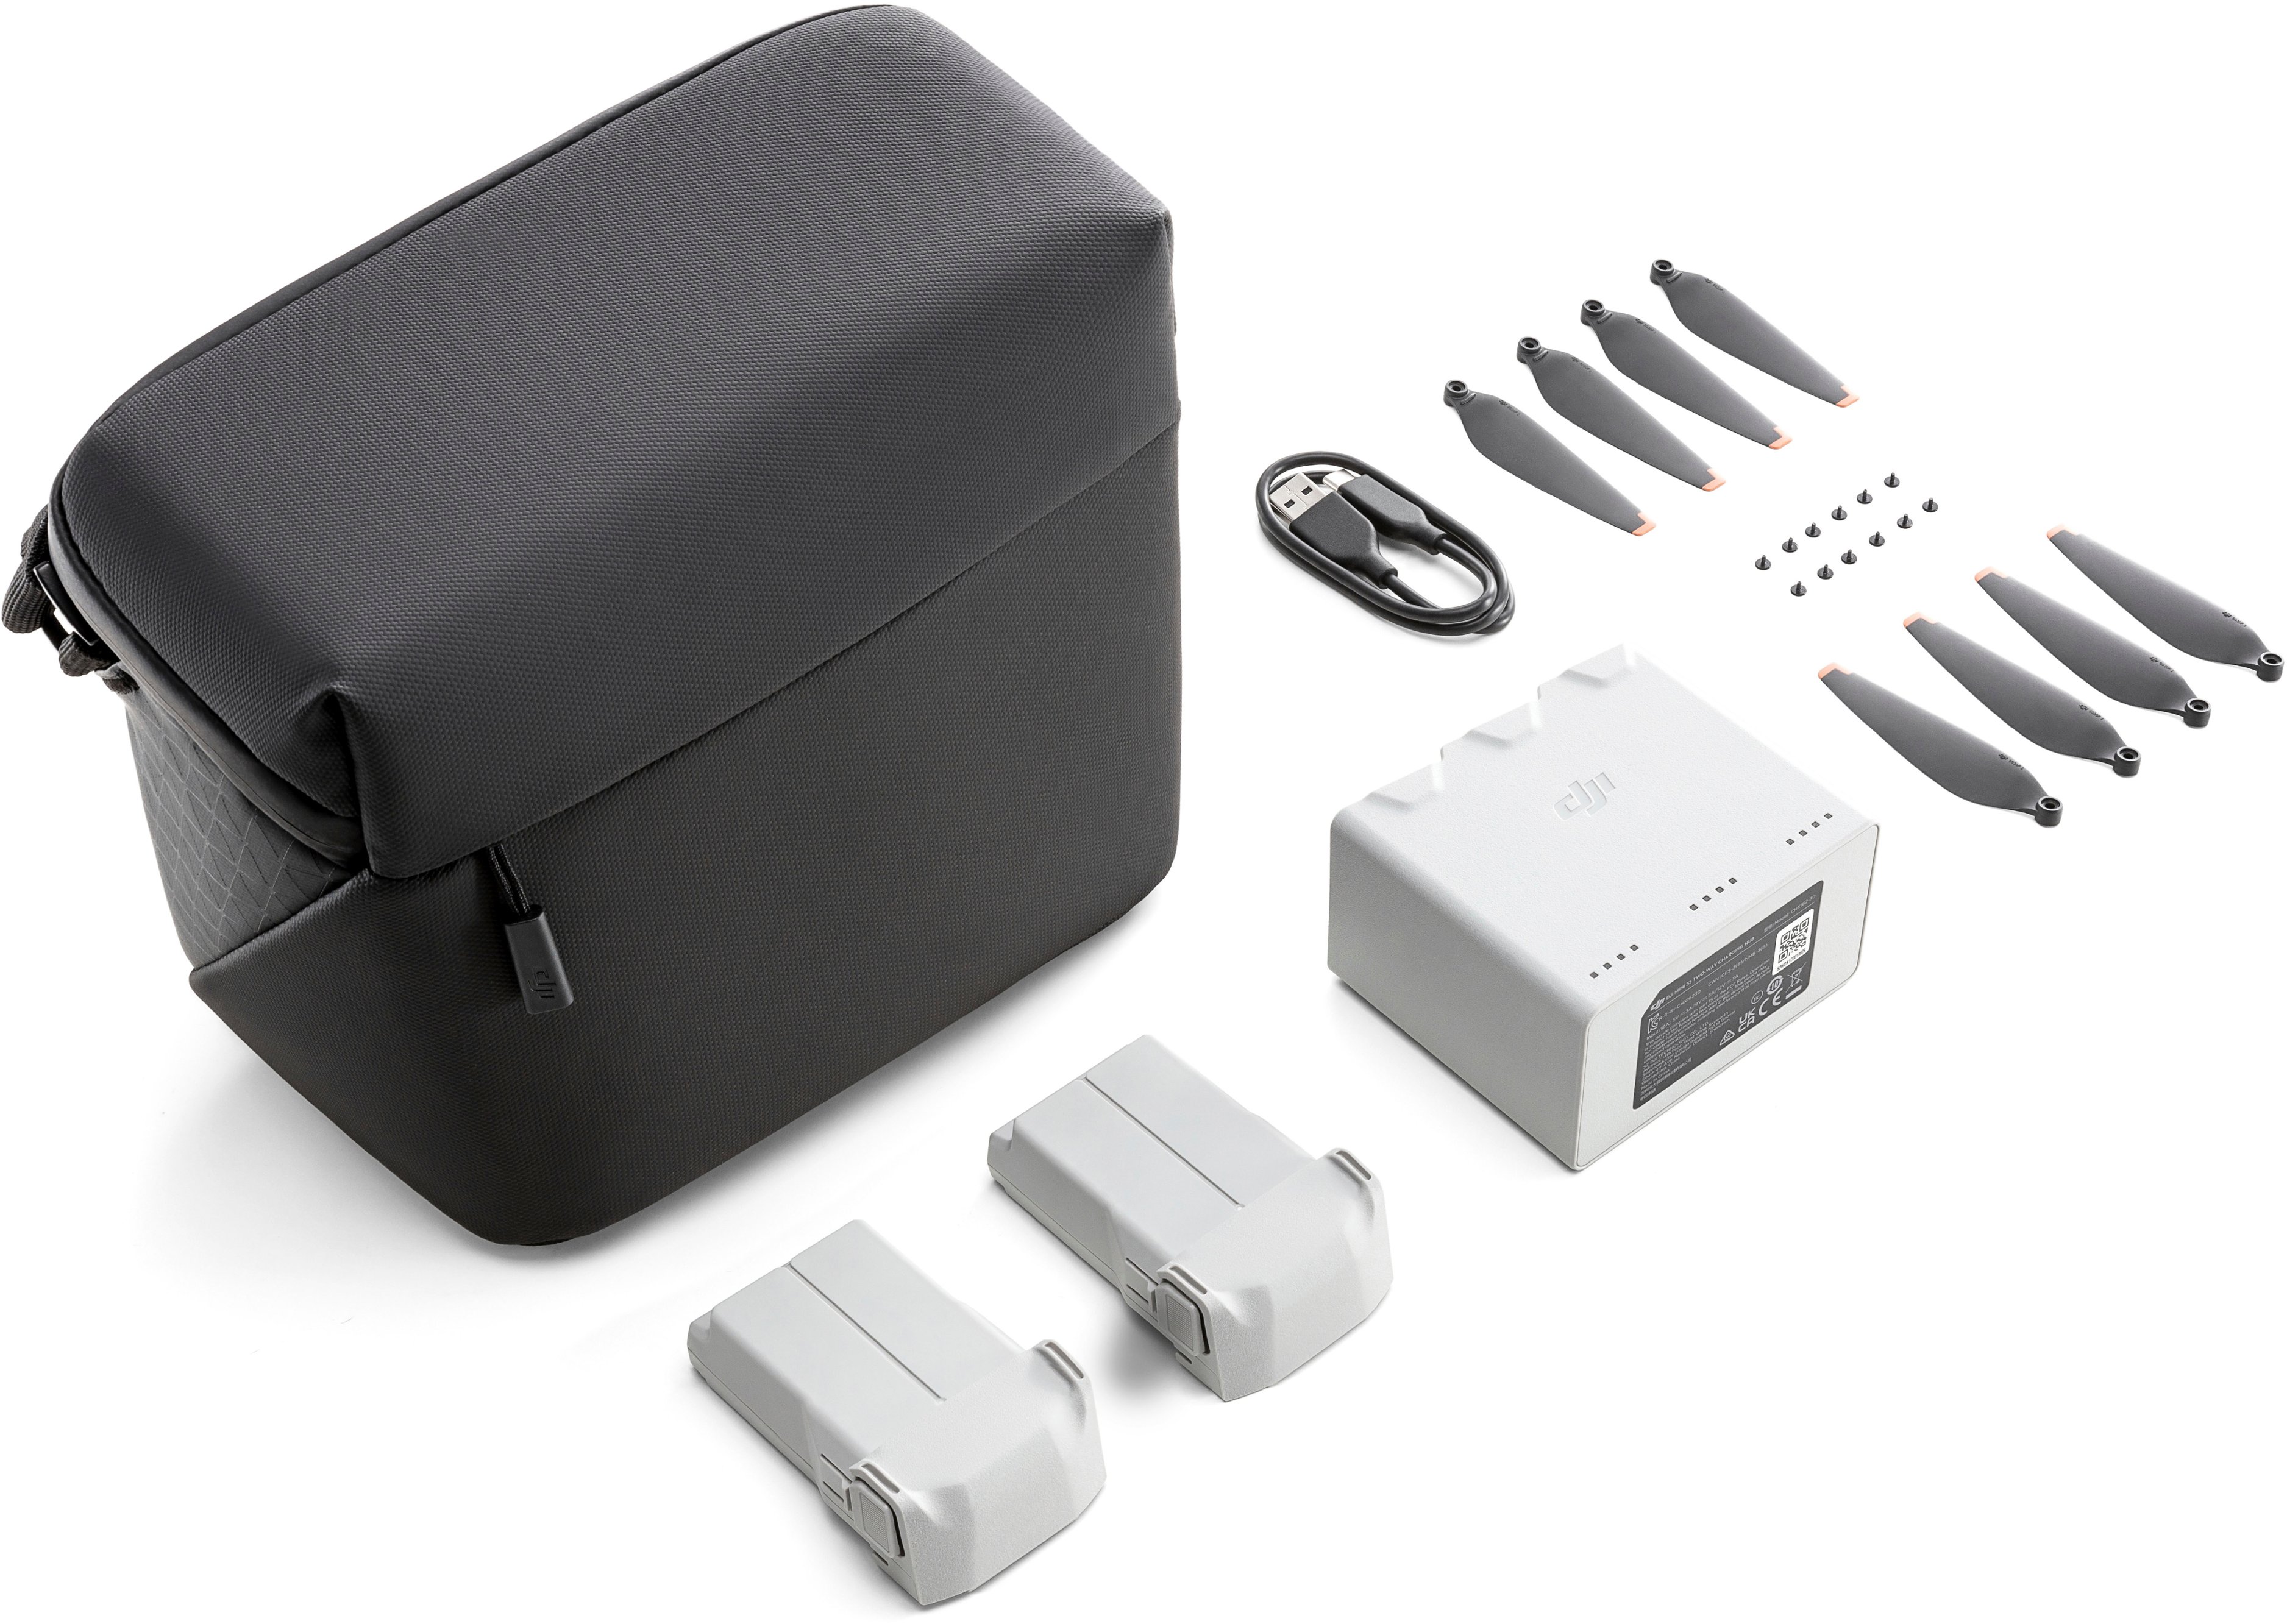 Buy Mavic Mini Intelligent Flight Battery - DJI Store